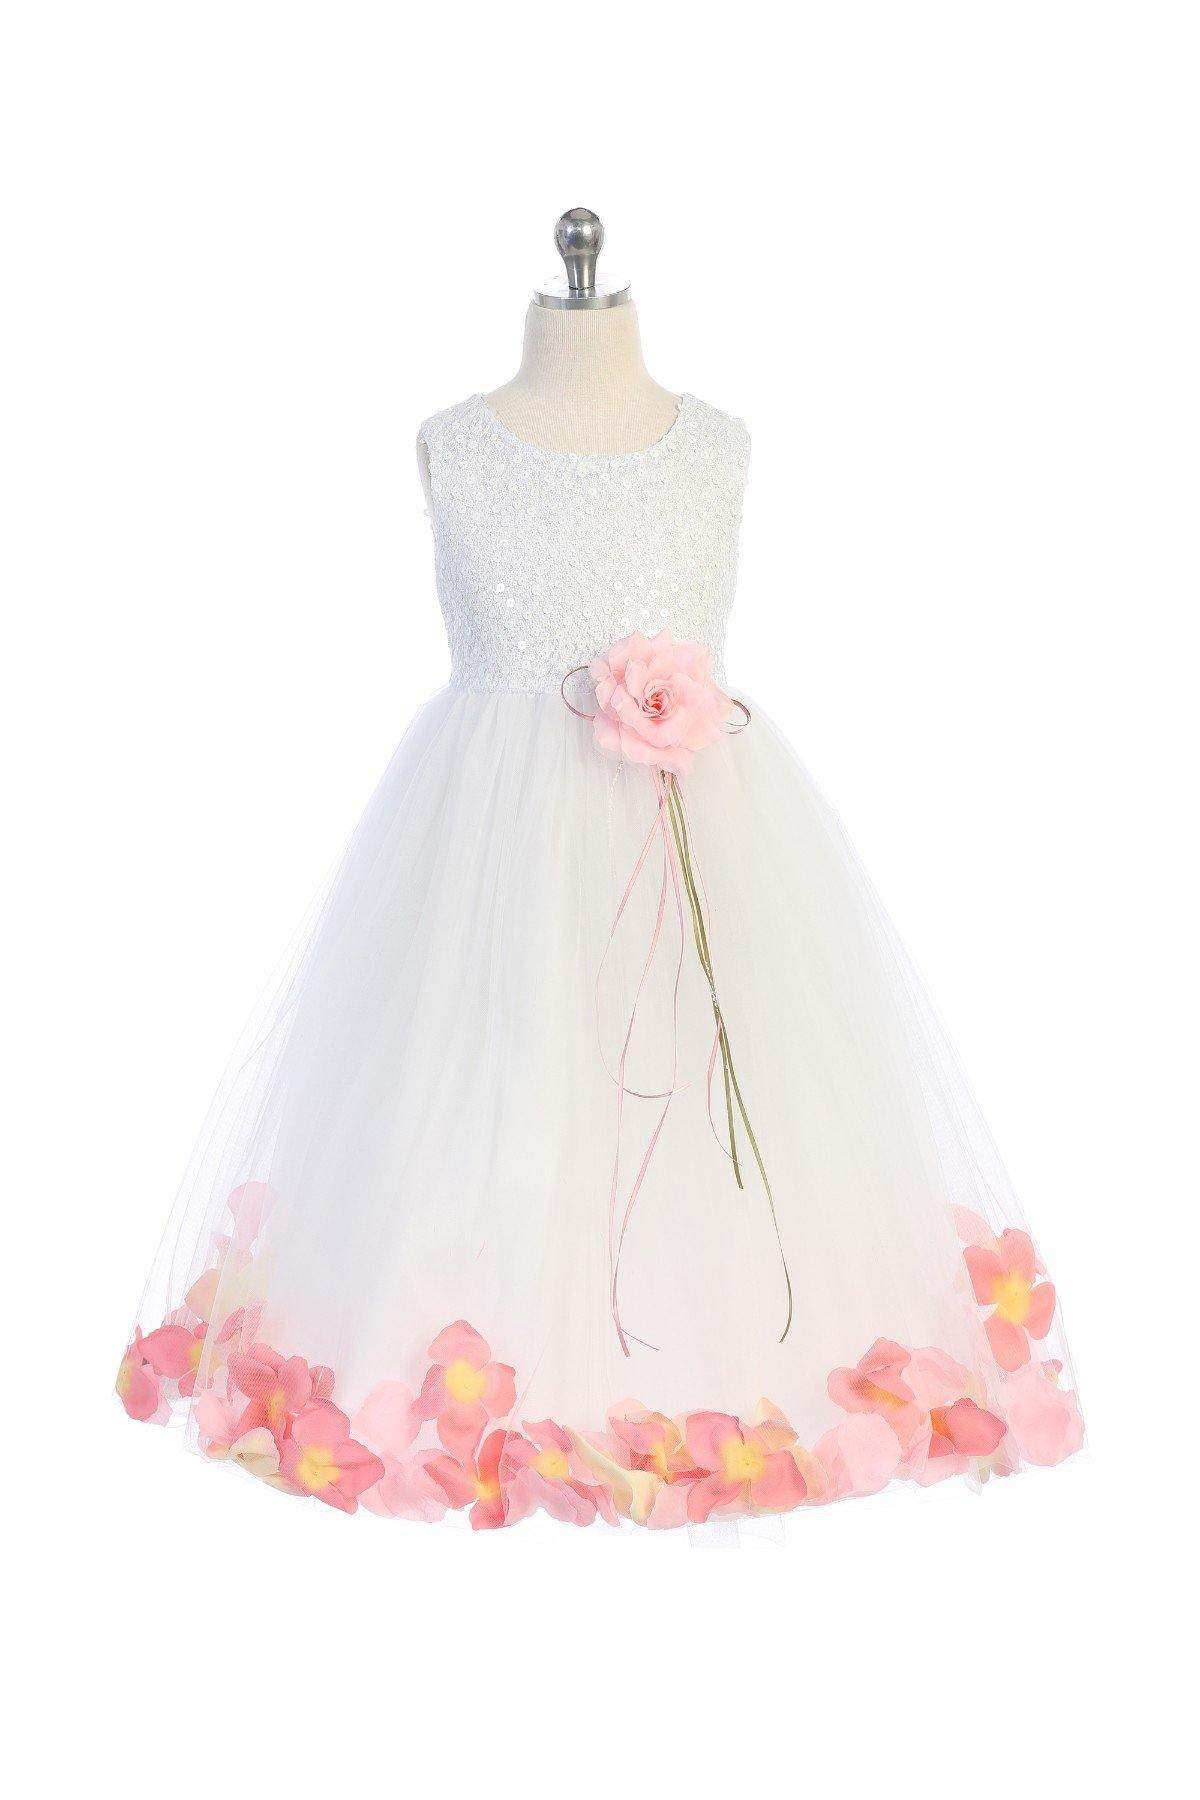 Sequin Top Petal Dress (2of2)-Kid's Dream-big_girl,fabric_Sequin,flower-girl-dresses,girl-dress,length_Tea Length,meta-related-collection-shop-the-outfit-girls,sequin,size_02,size_04,size_06,size_08,size_10,size_12,size_14